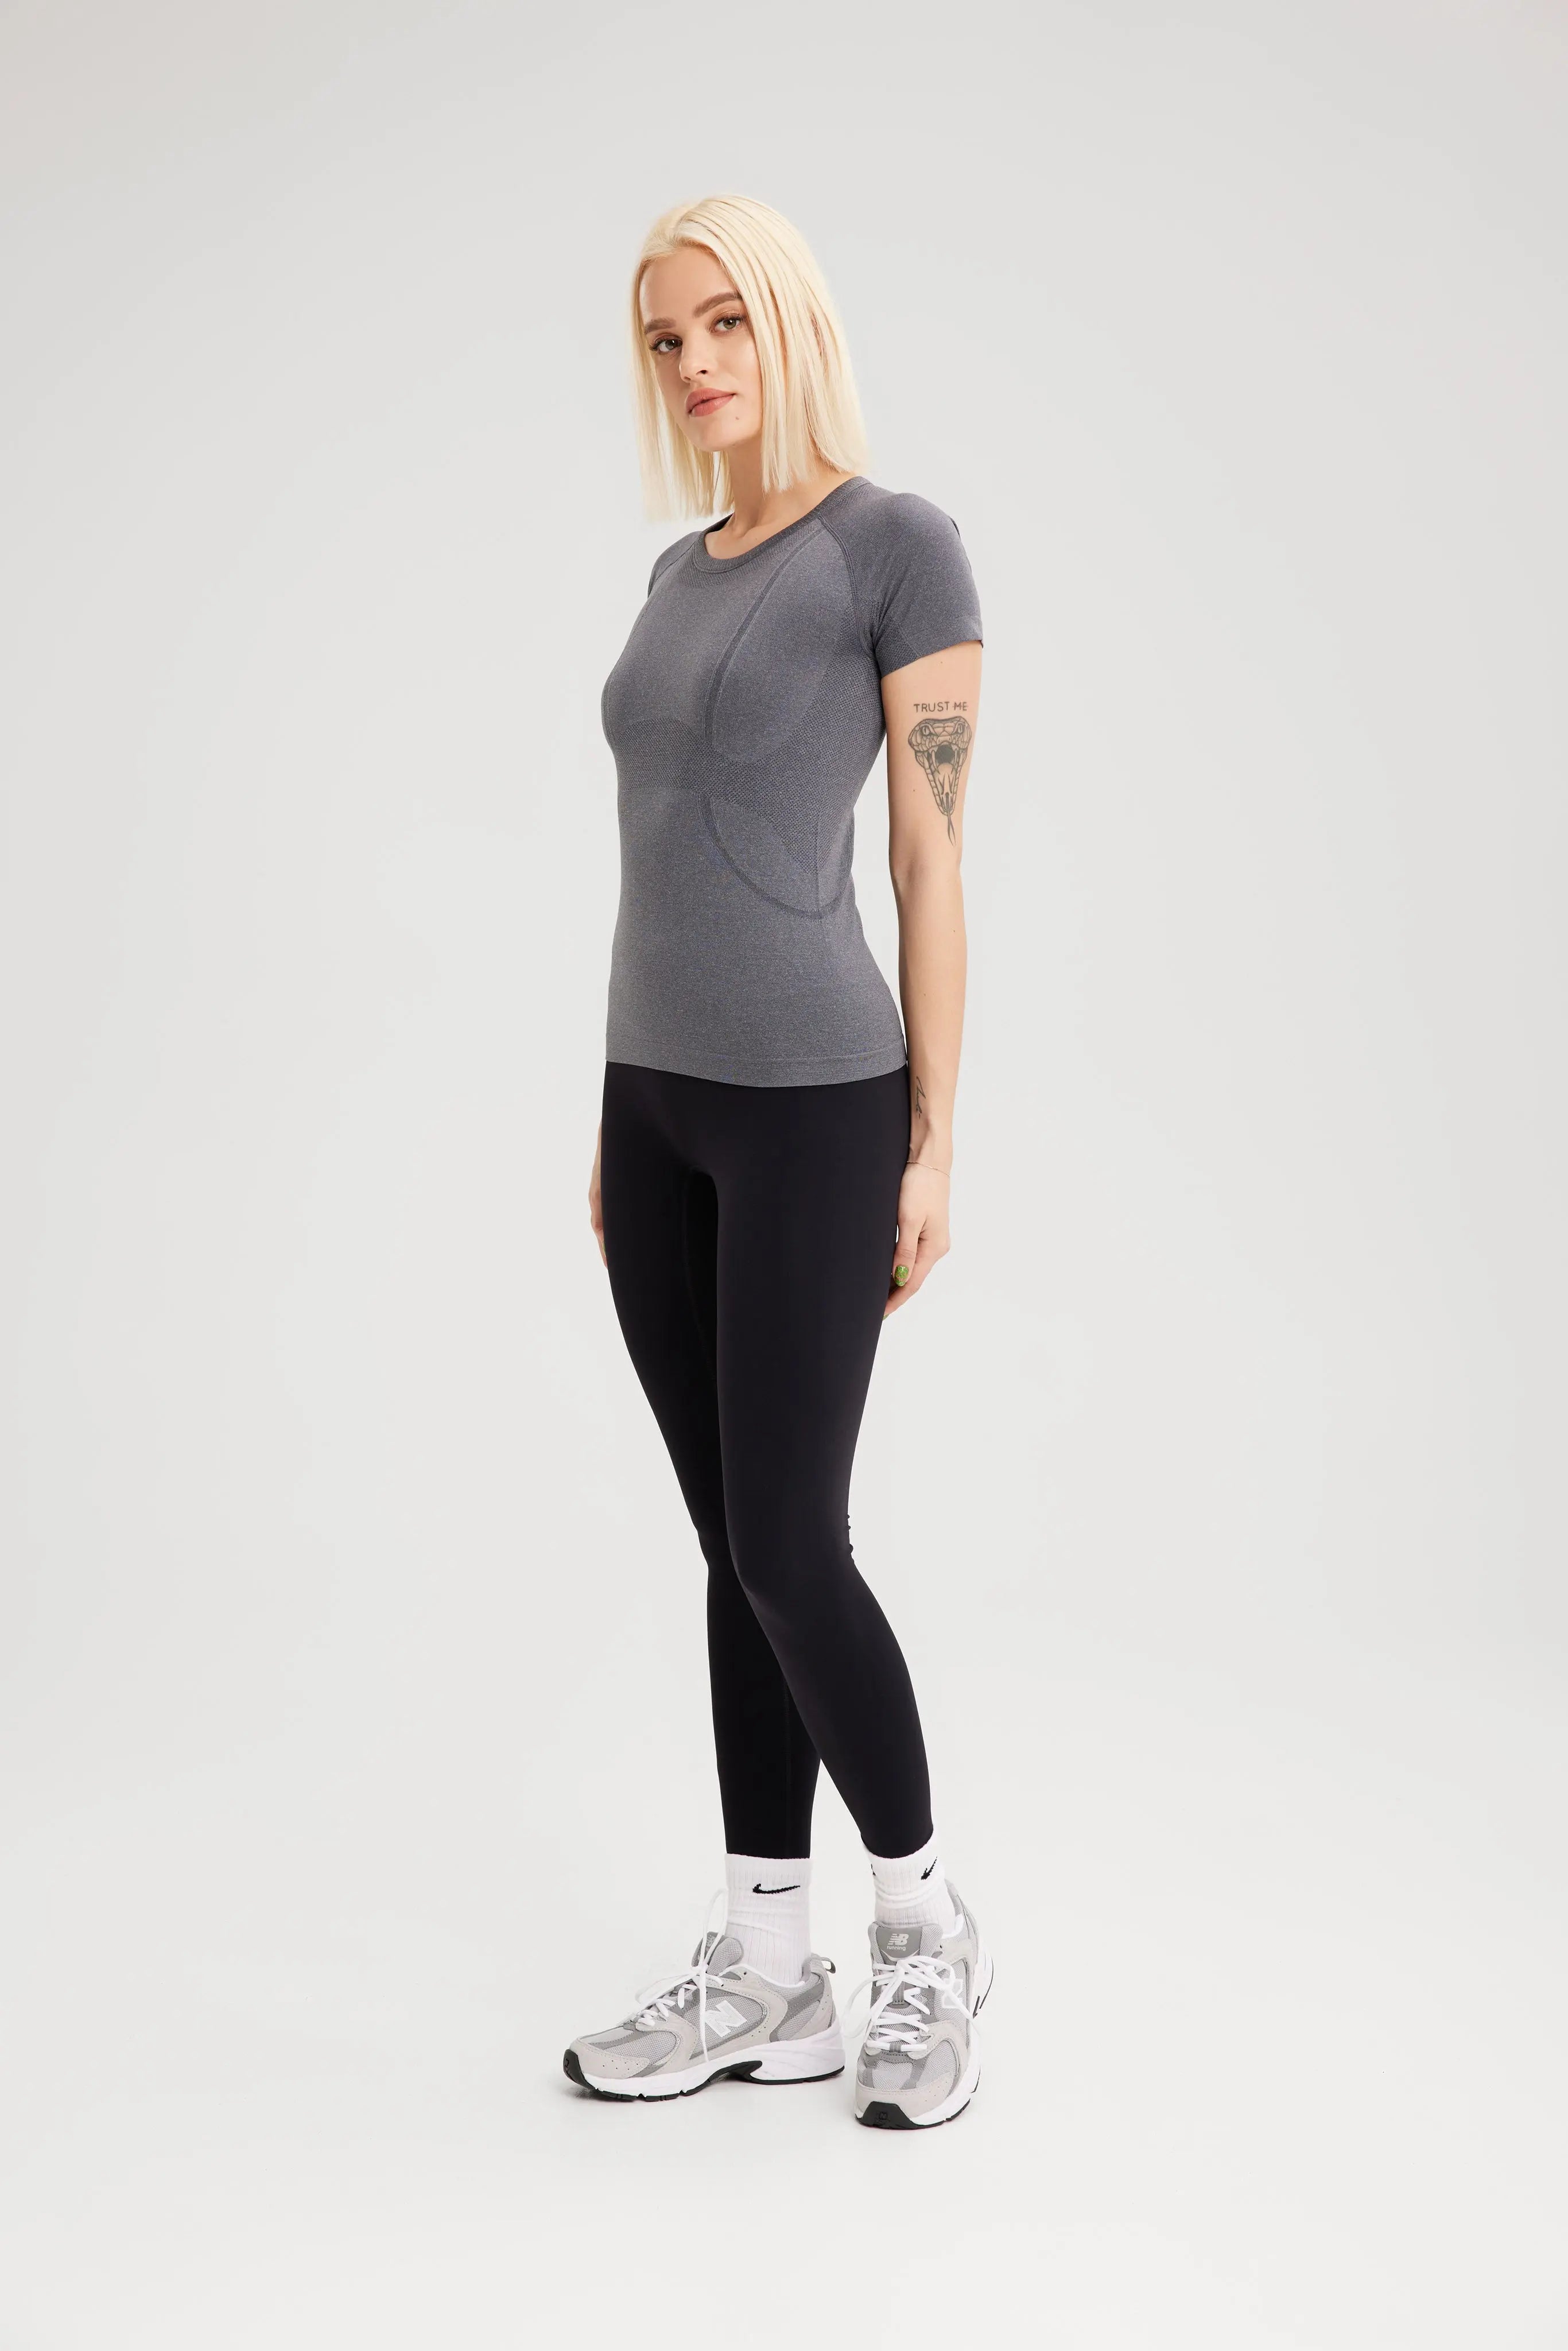 EKJ Women's Active Stretch T-Shirt - Heather Grey My Store